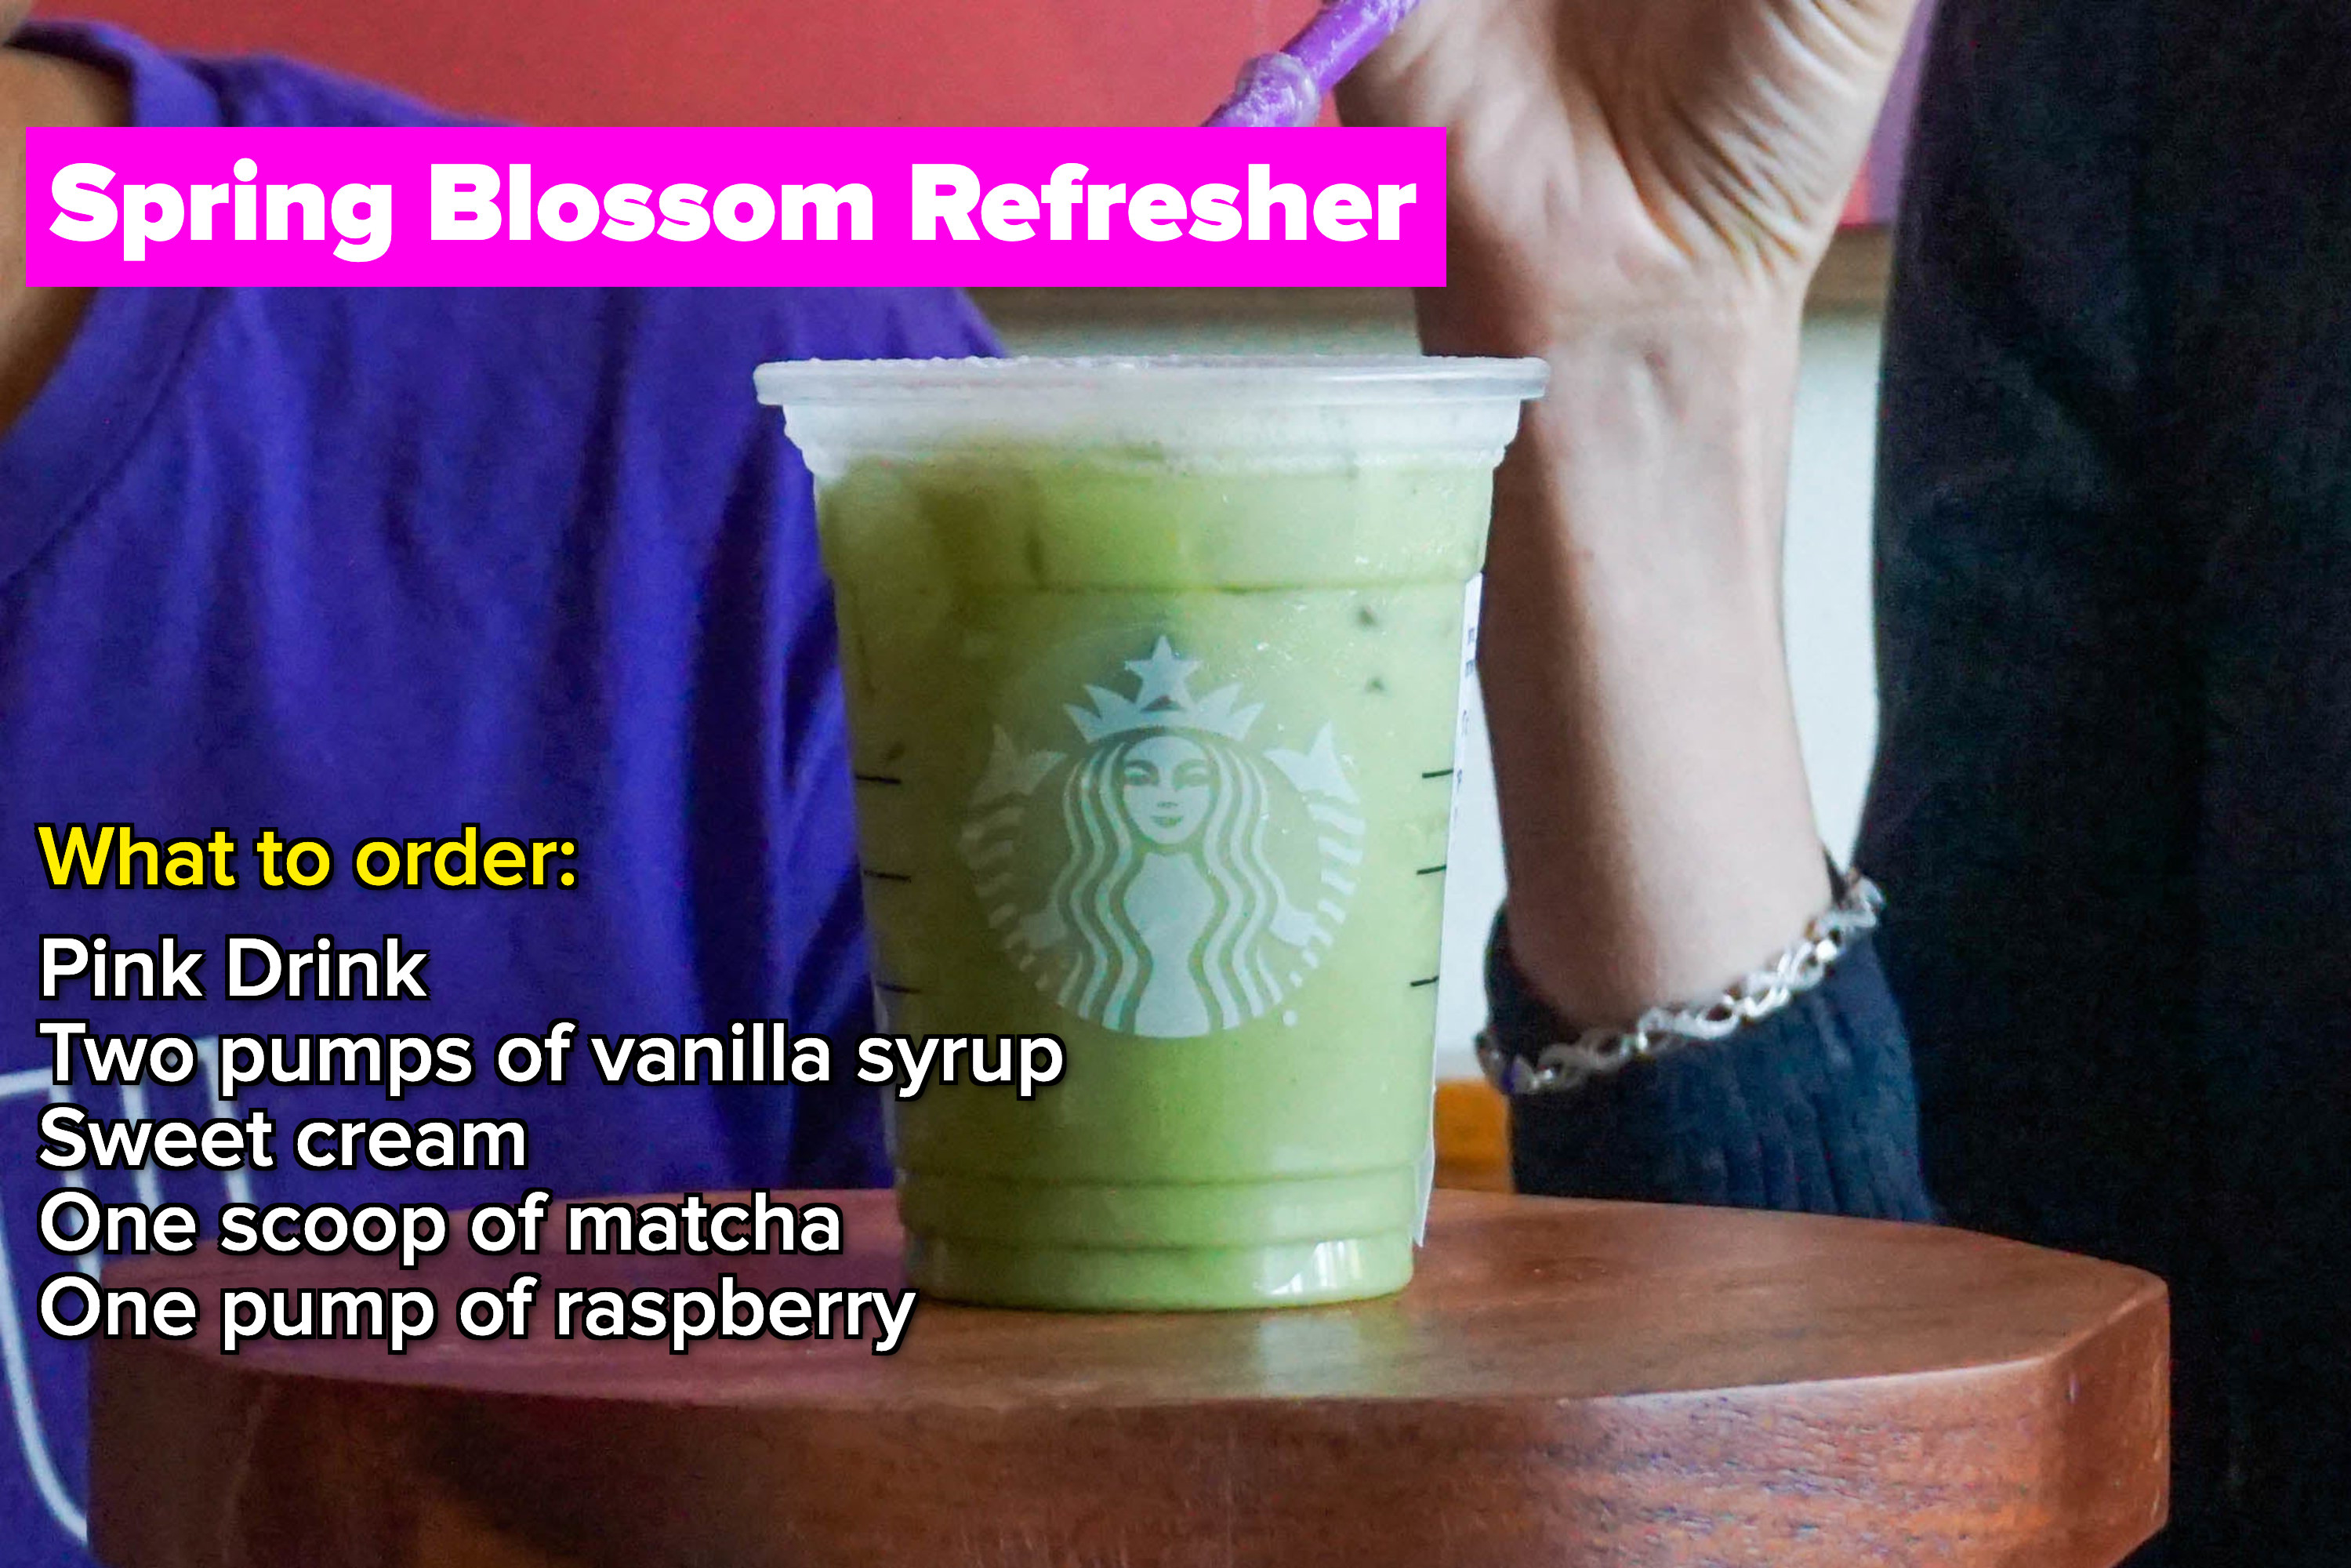 Starbucks Spring Blossom Refresher drink